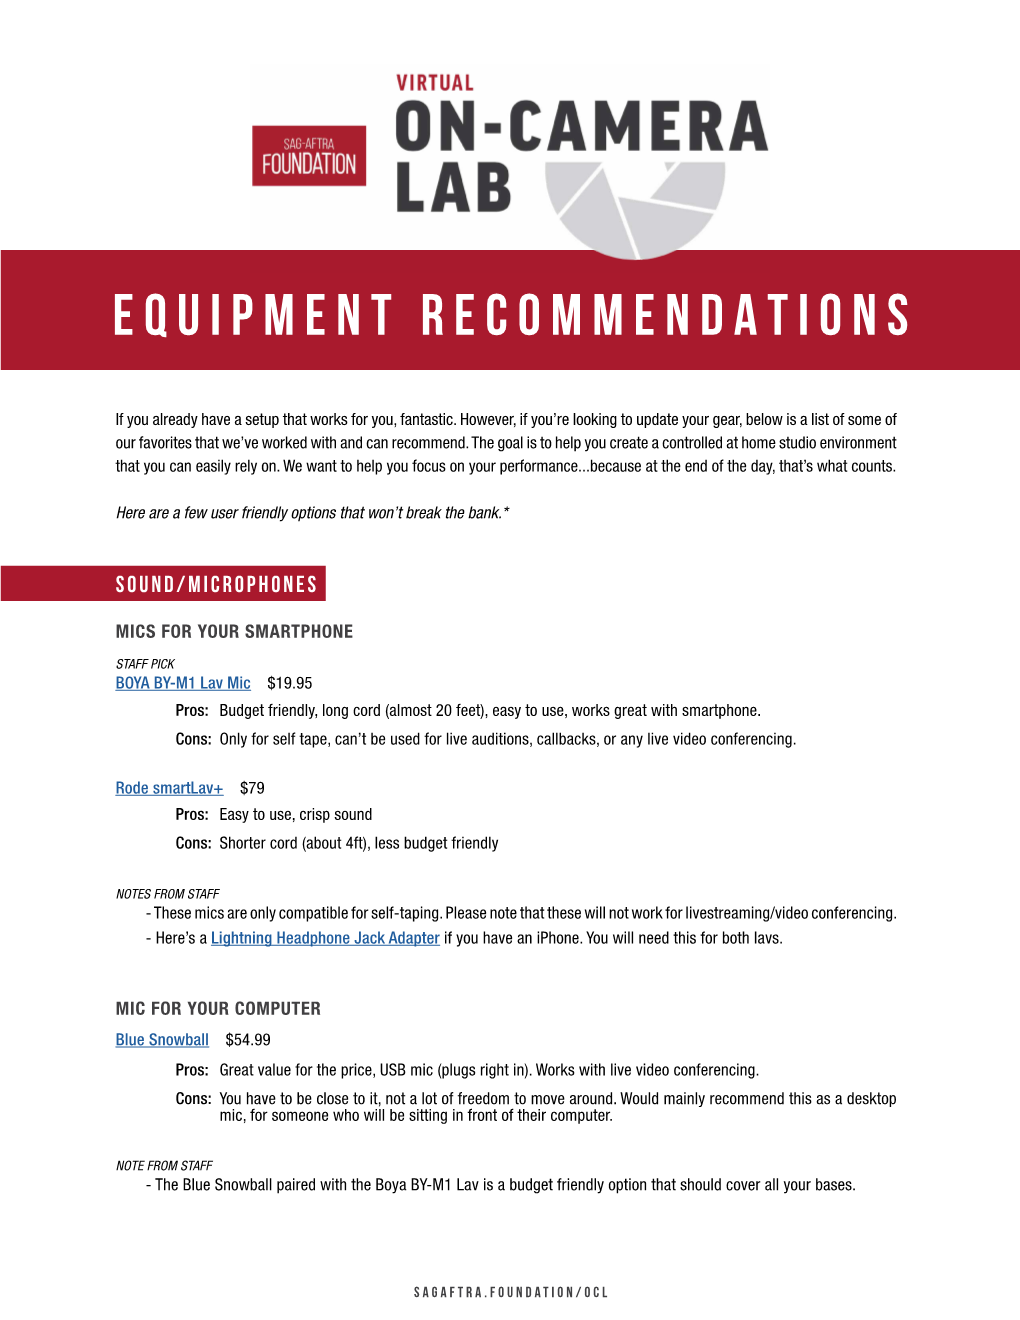 Equipment Recommendations